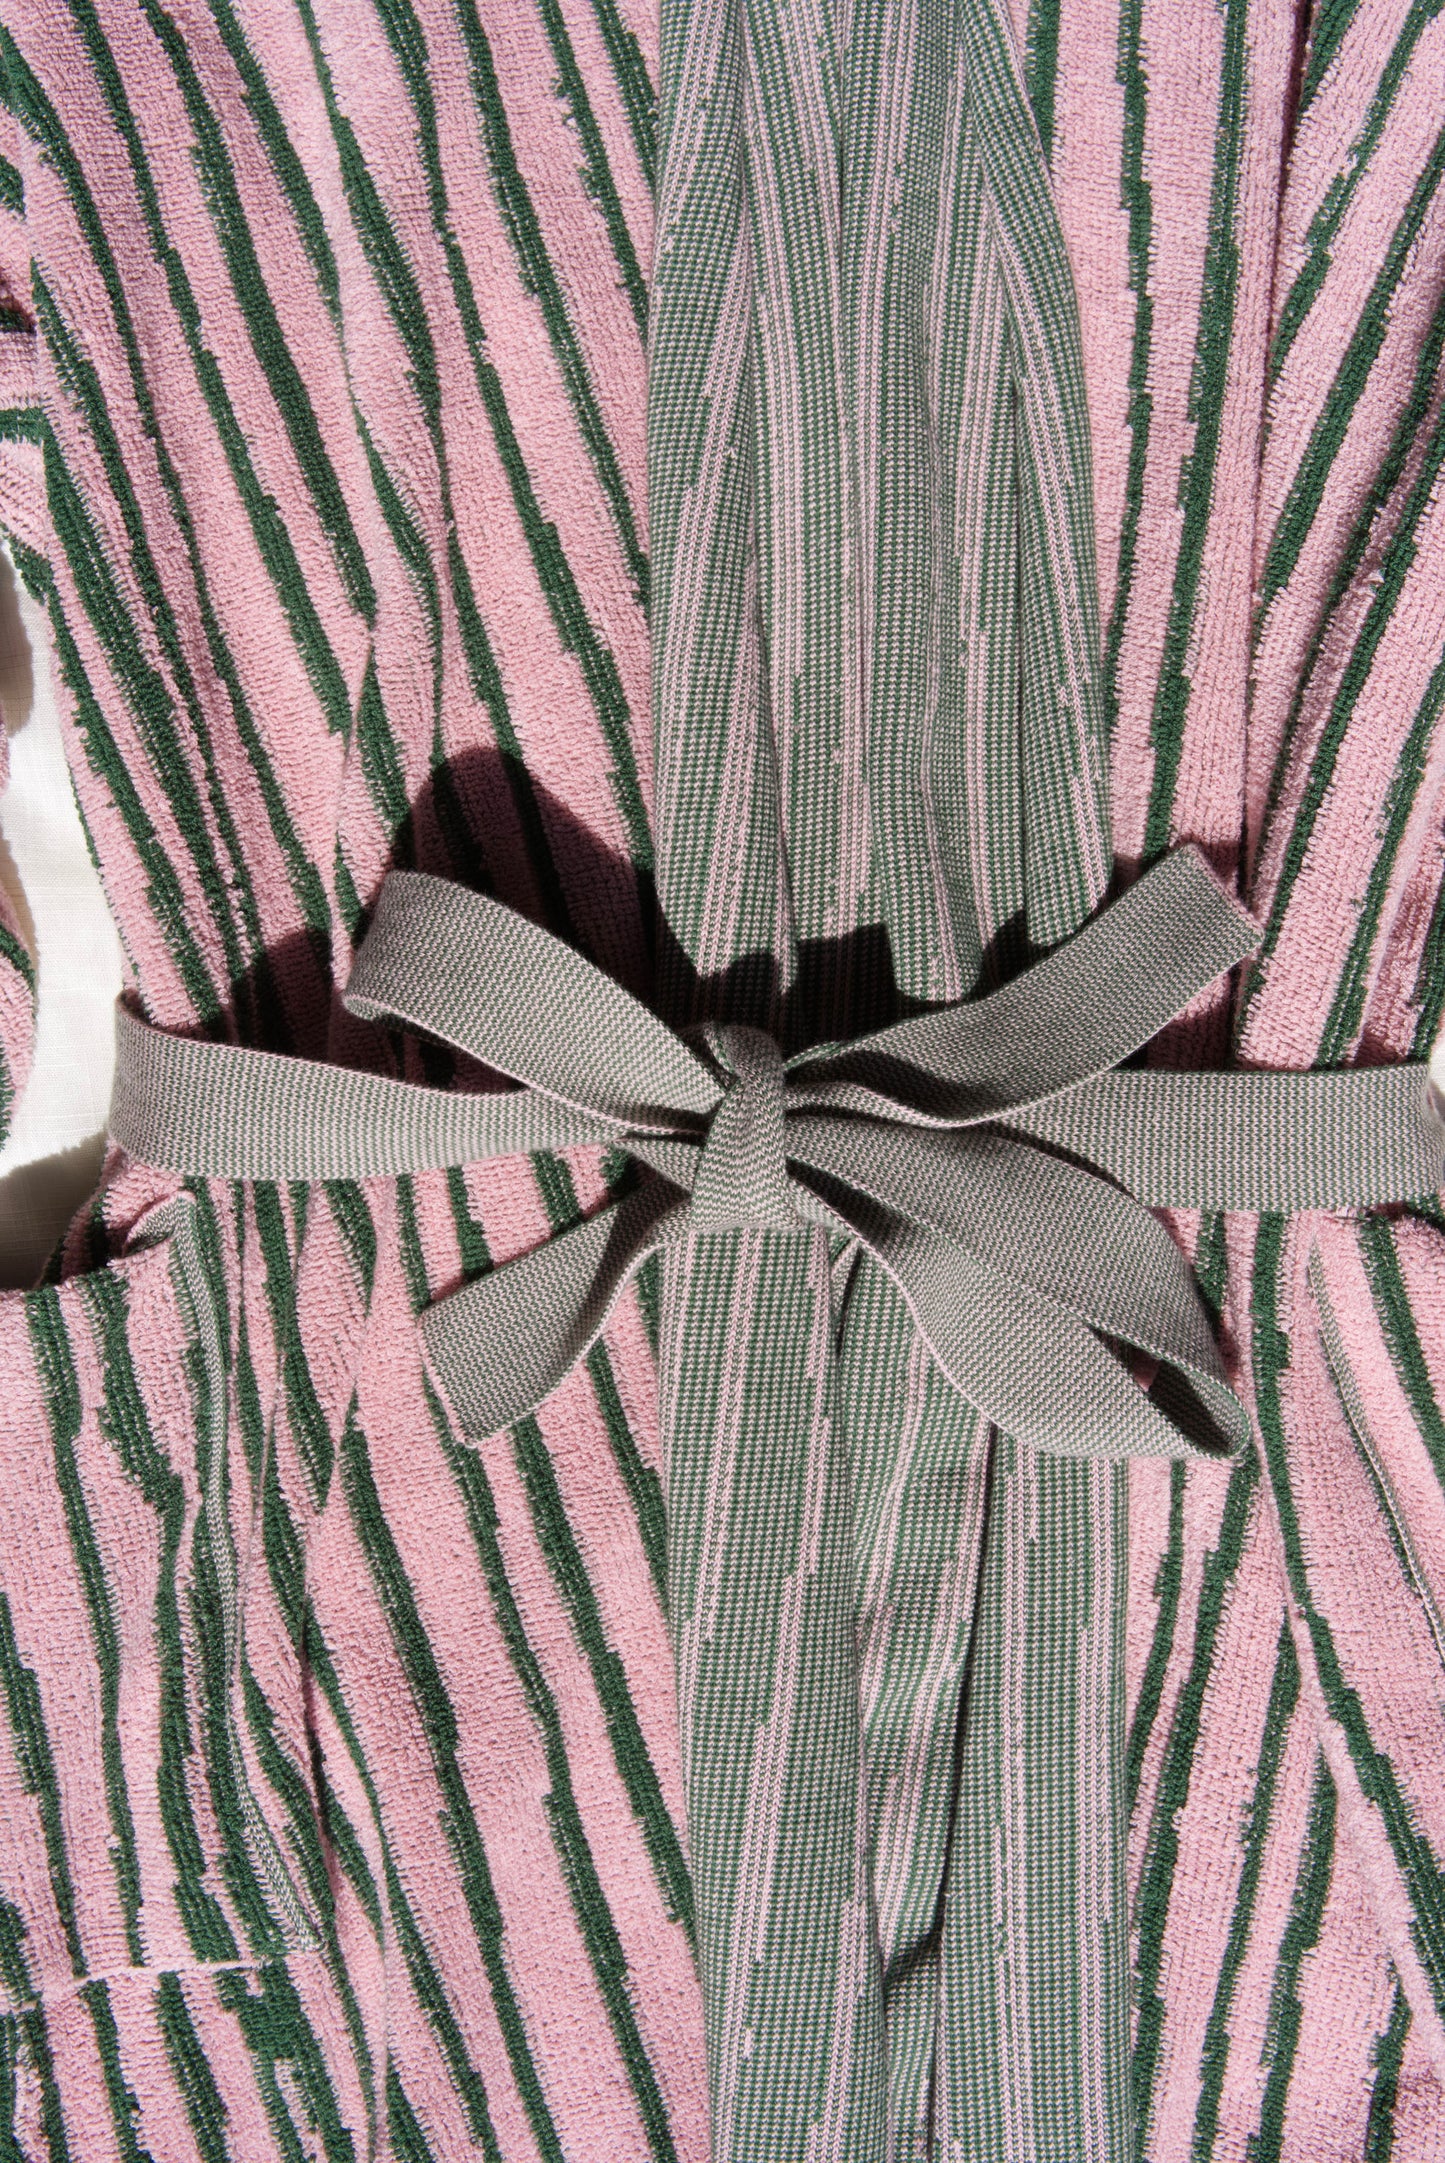 Stripe Bathrobe |   Pink & Green